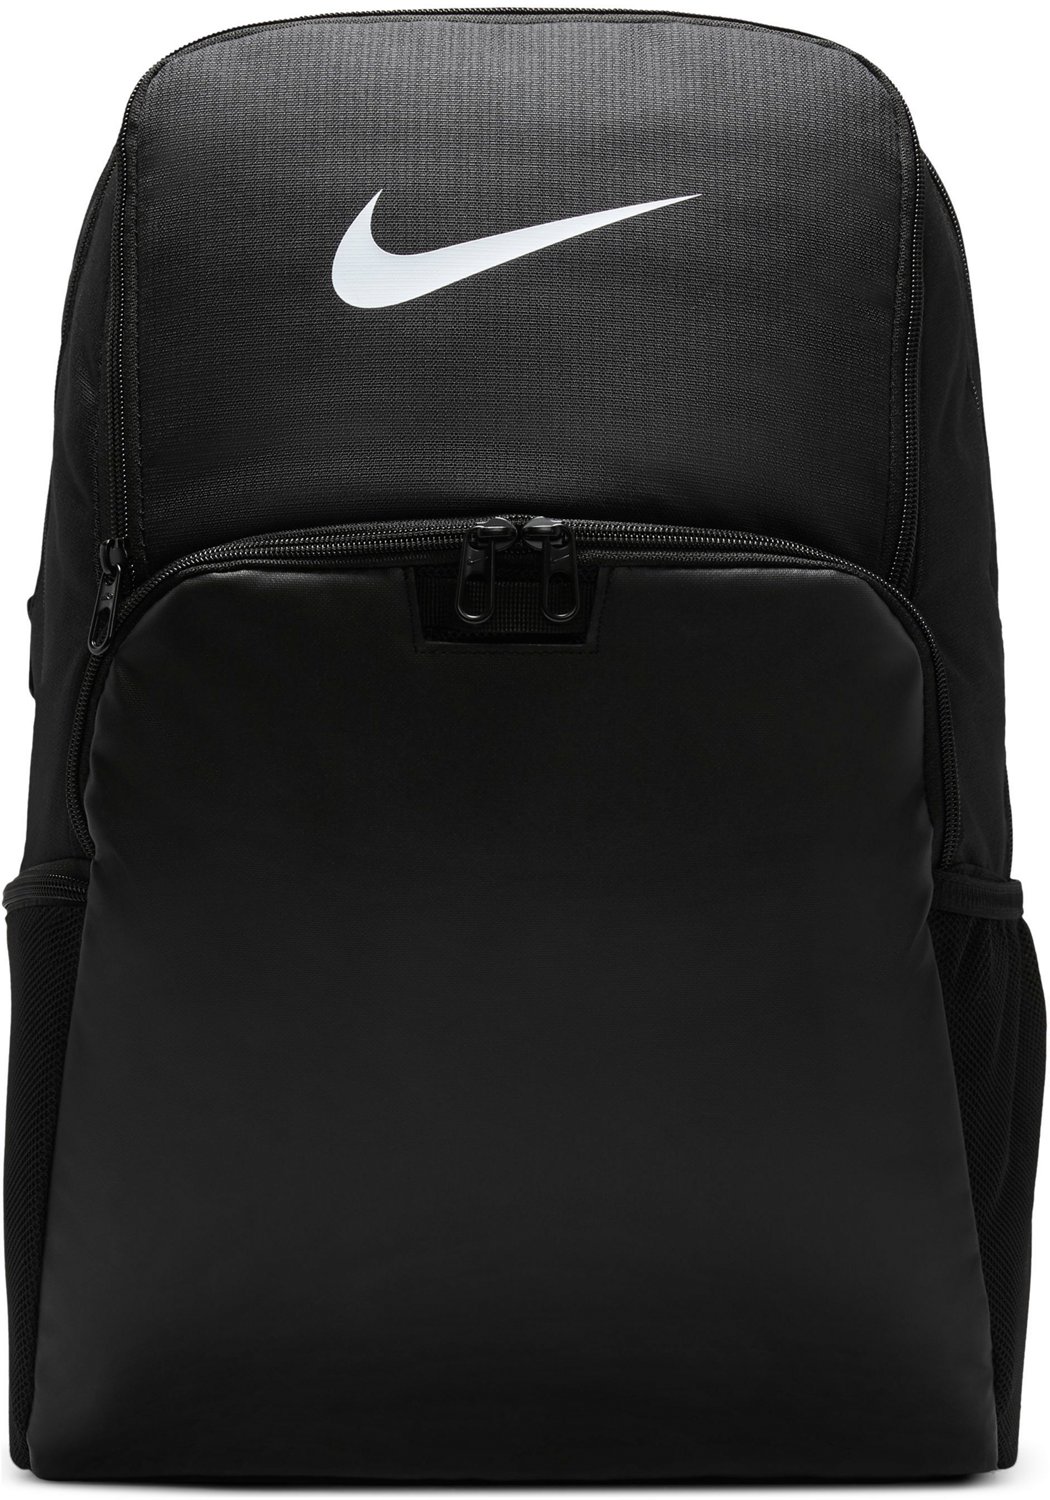 Brasilia XL 9.5 Backpack | Academy